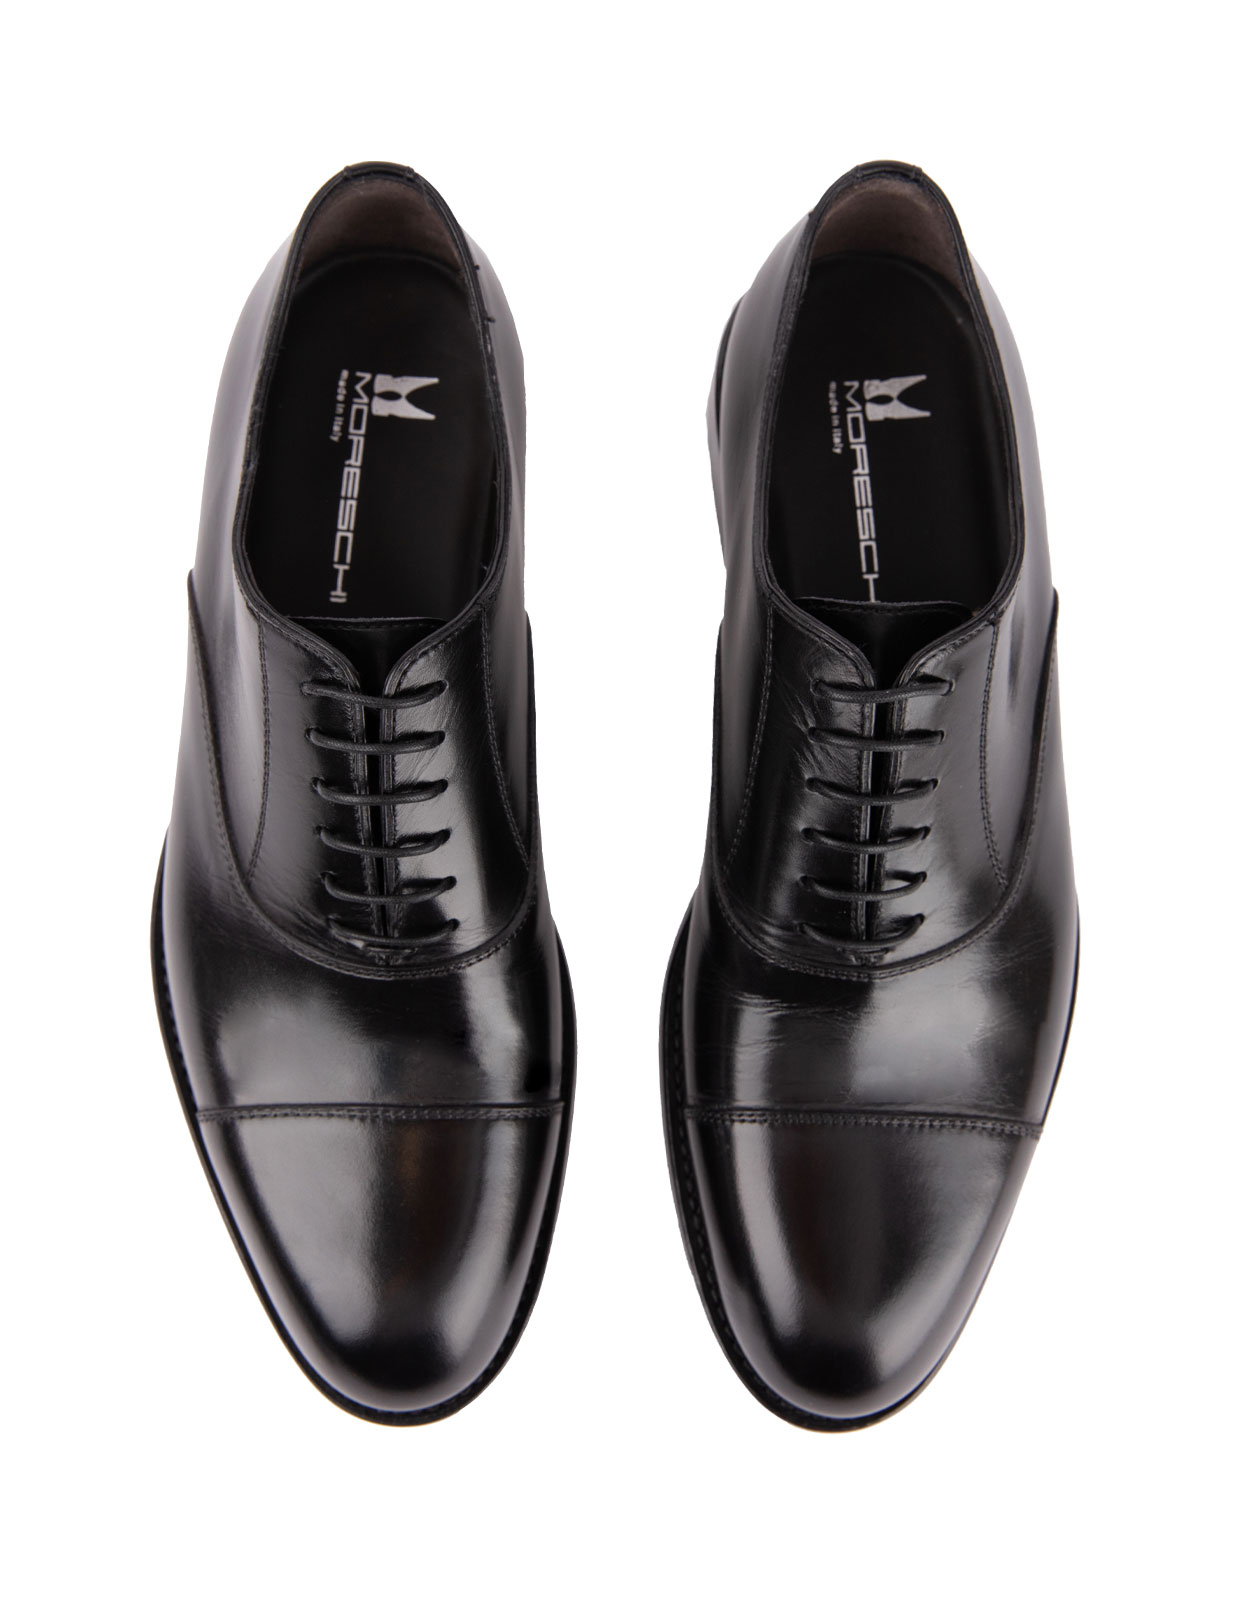 New York Oxford Shoes Calfskin Black